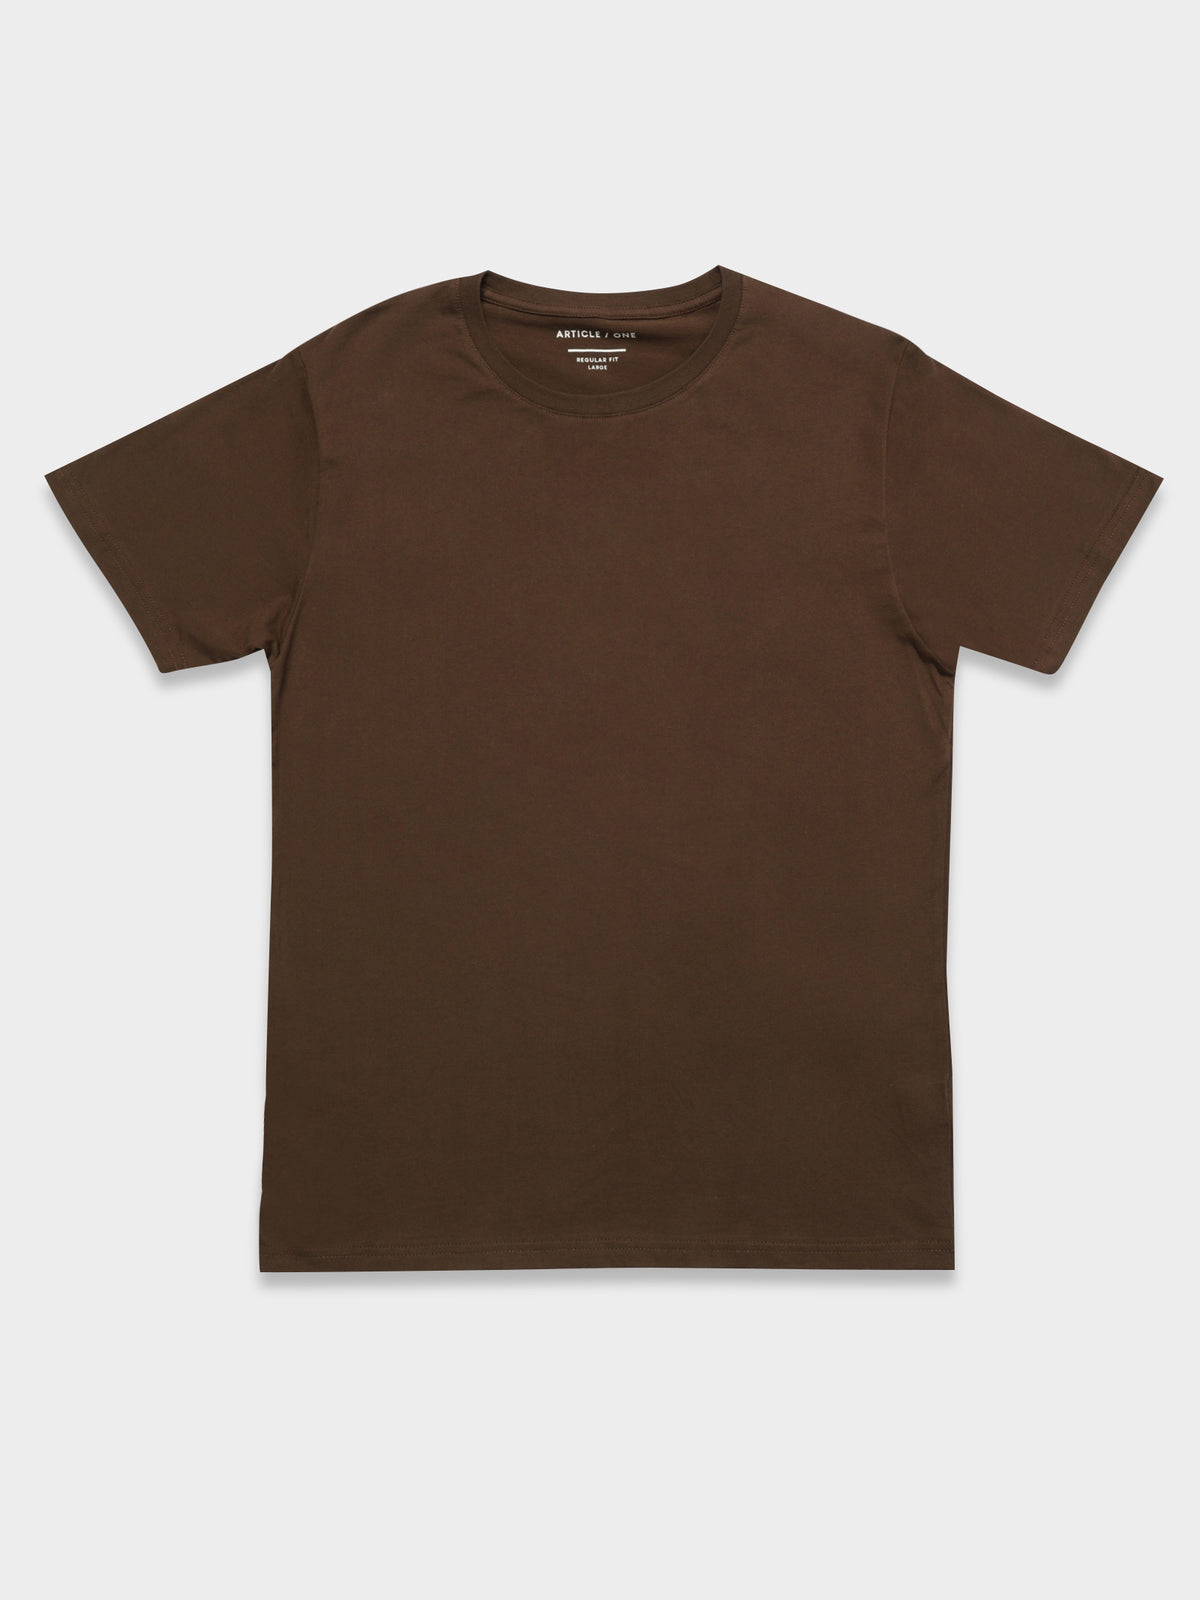 Plain Crew T-Shirt in Dark Brown